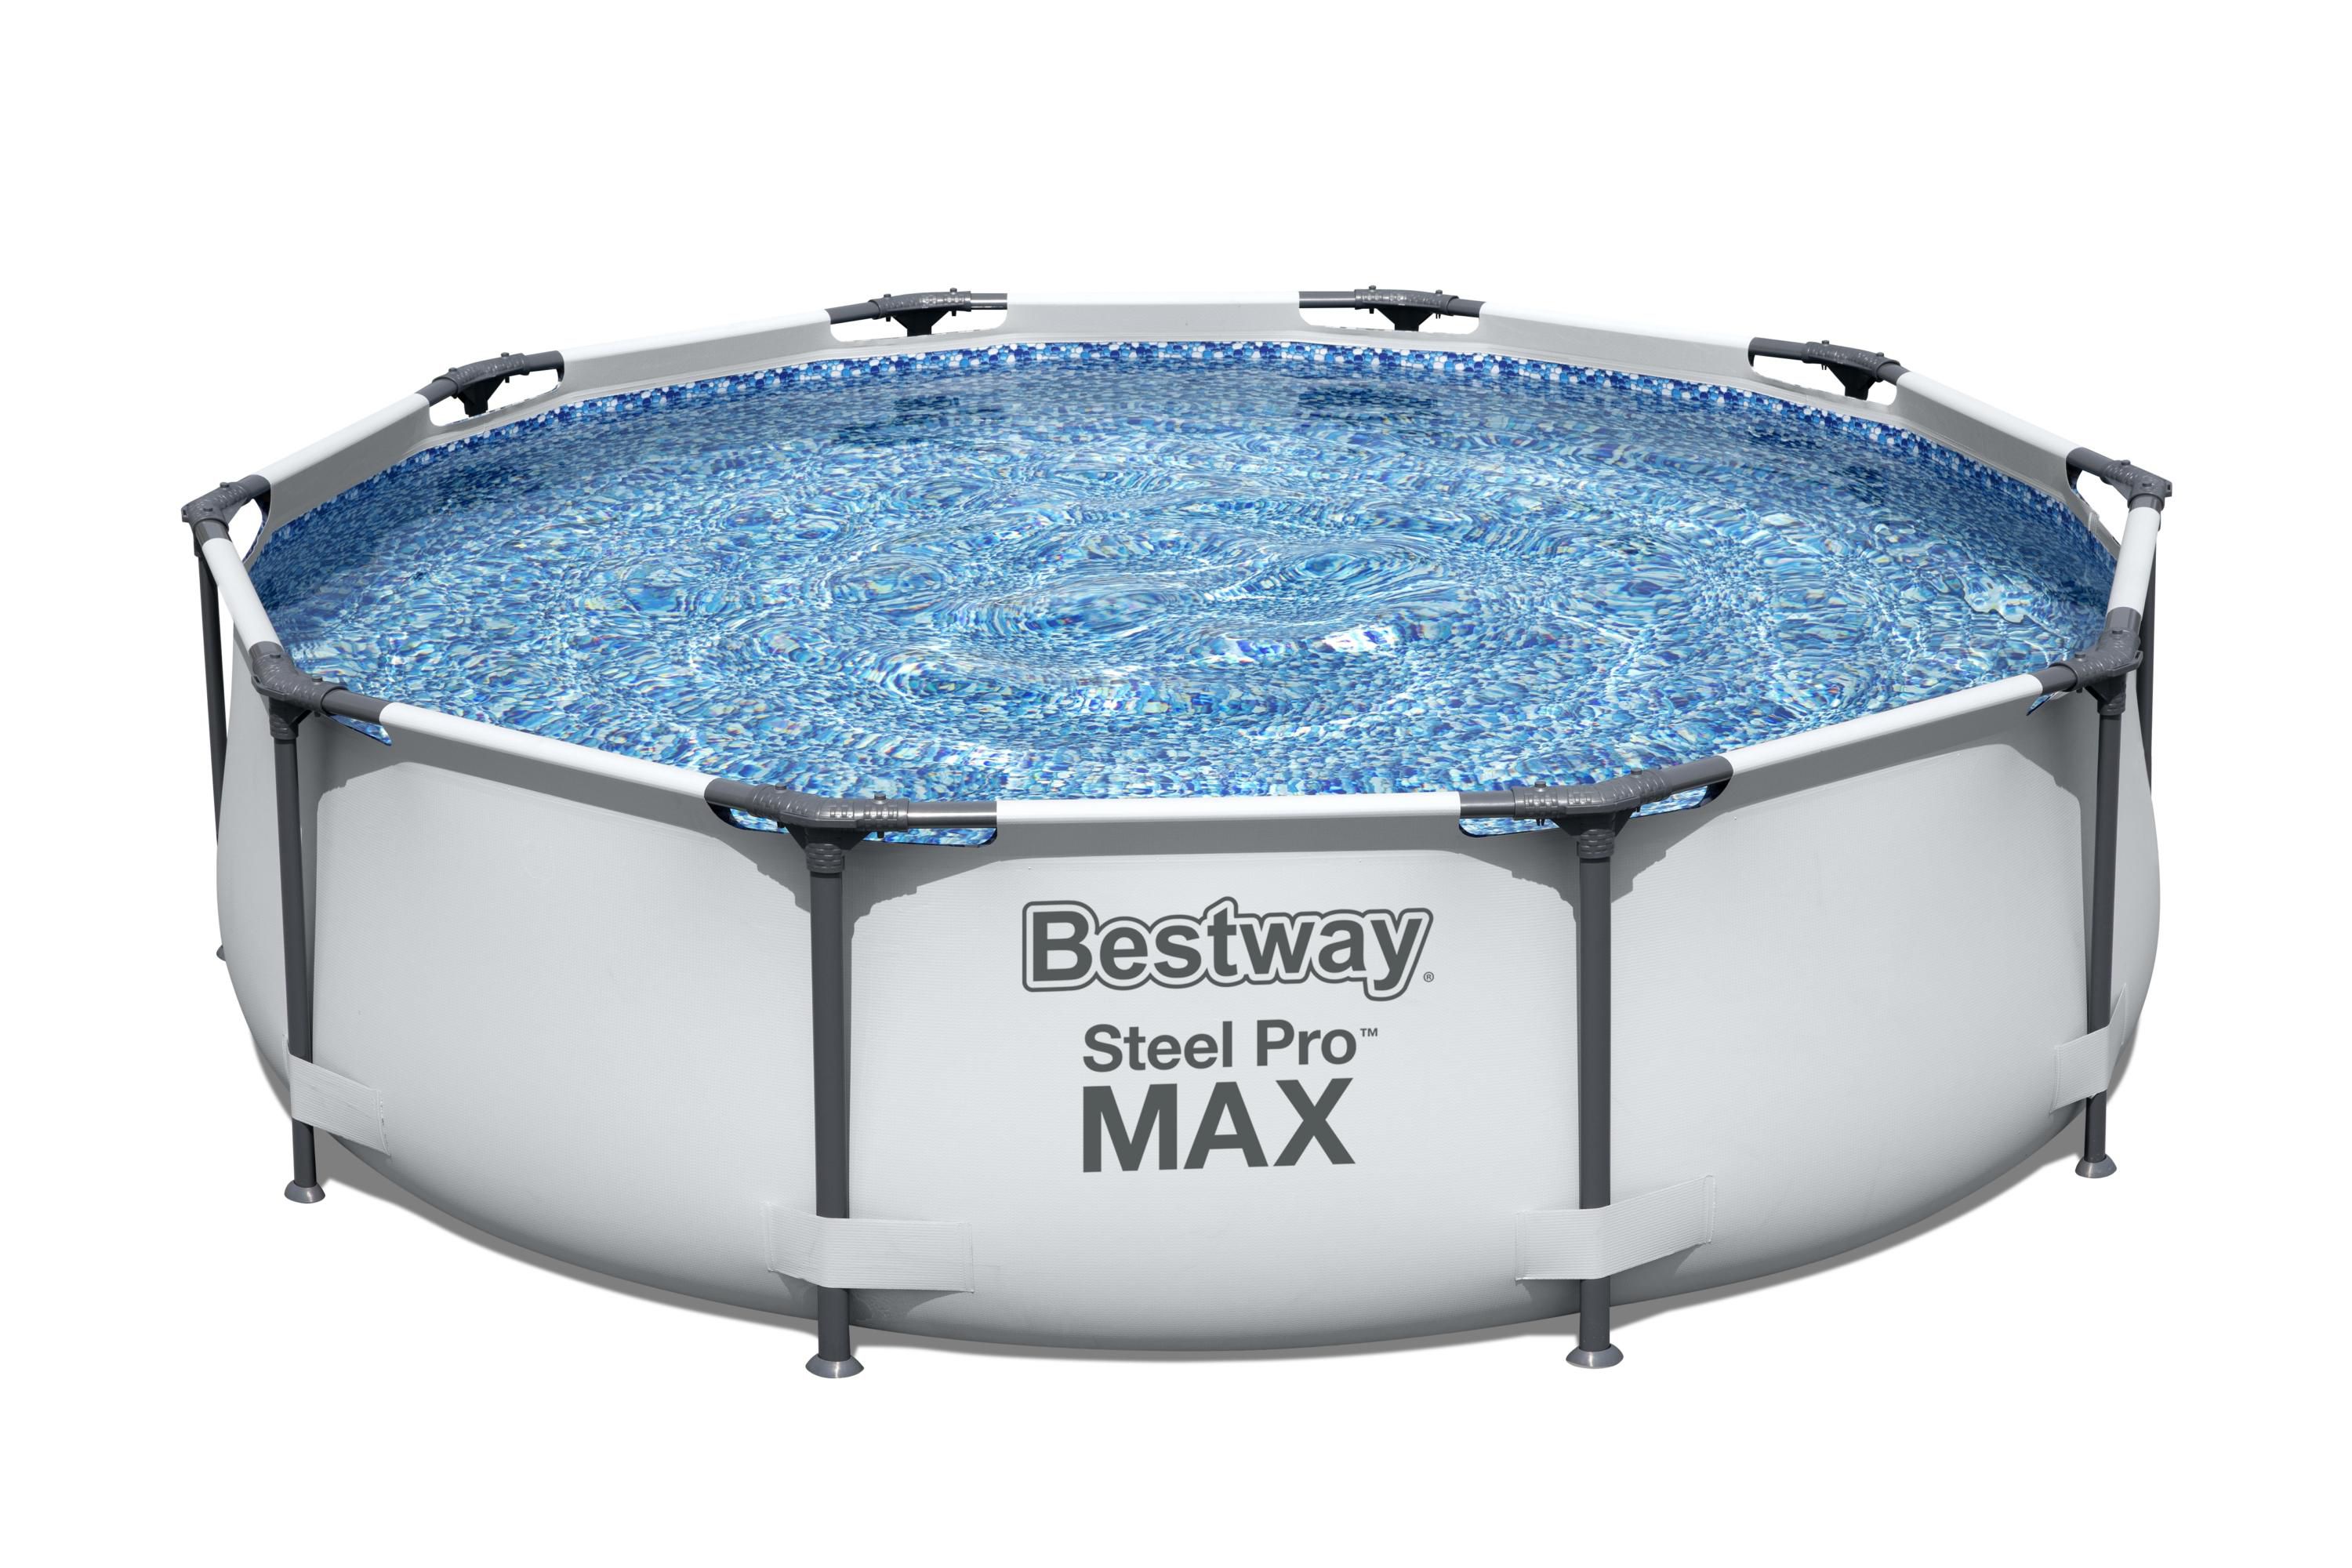 Bestway Steel pro max Polyvinyl chloride (PVC) Pool (W) 3.05m x (L) 3.05m